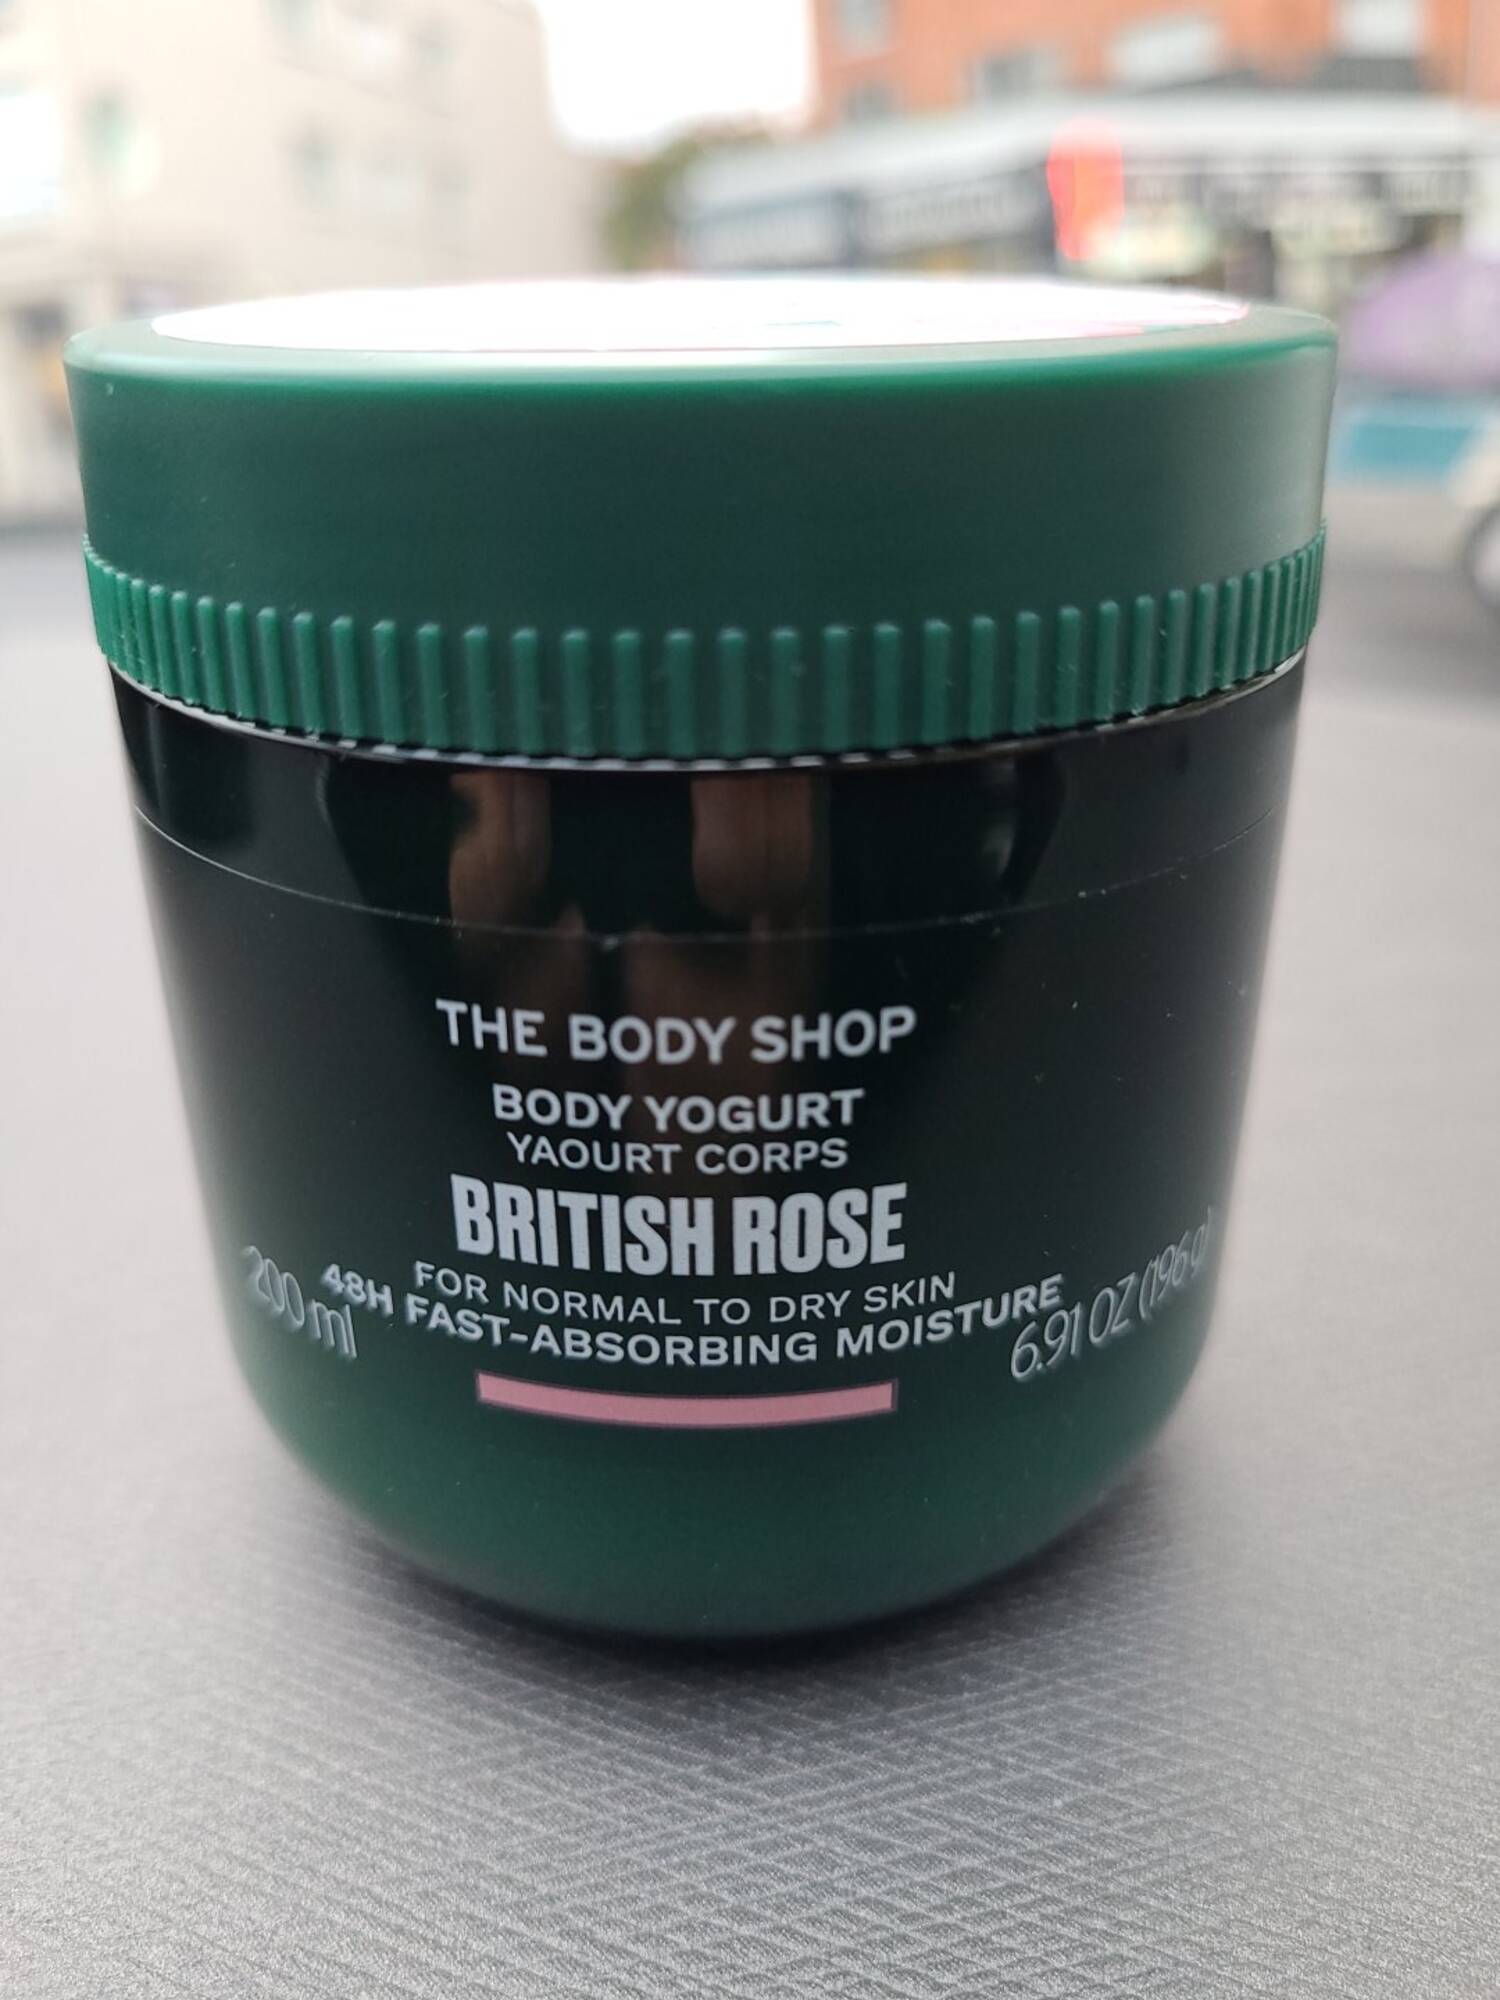 THE BODY SHOP - British rose - Yaourt corps